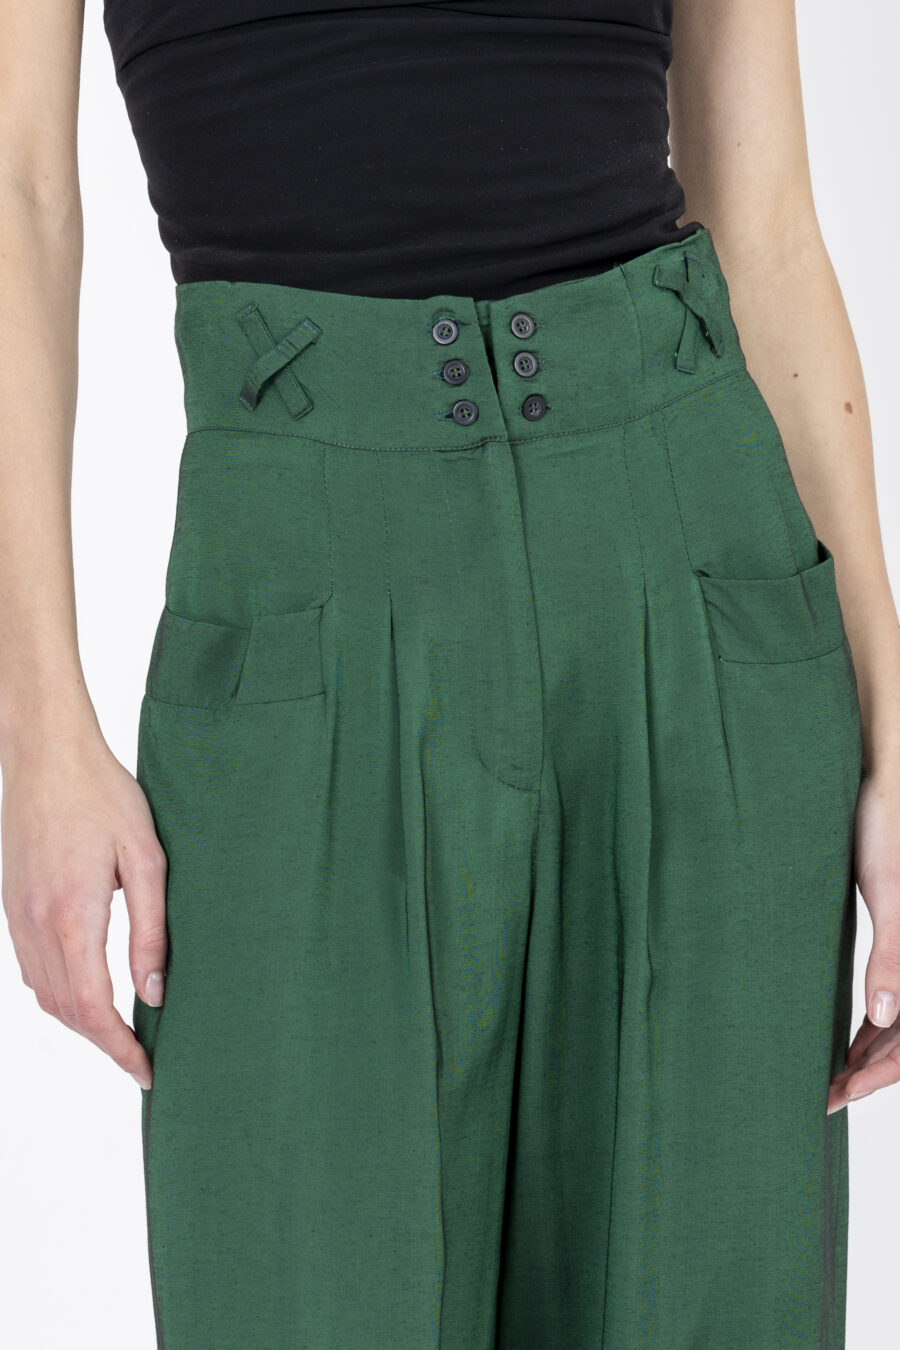 erica-pants-green-uniforme-athens